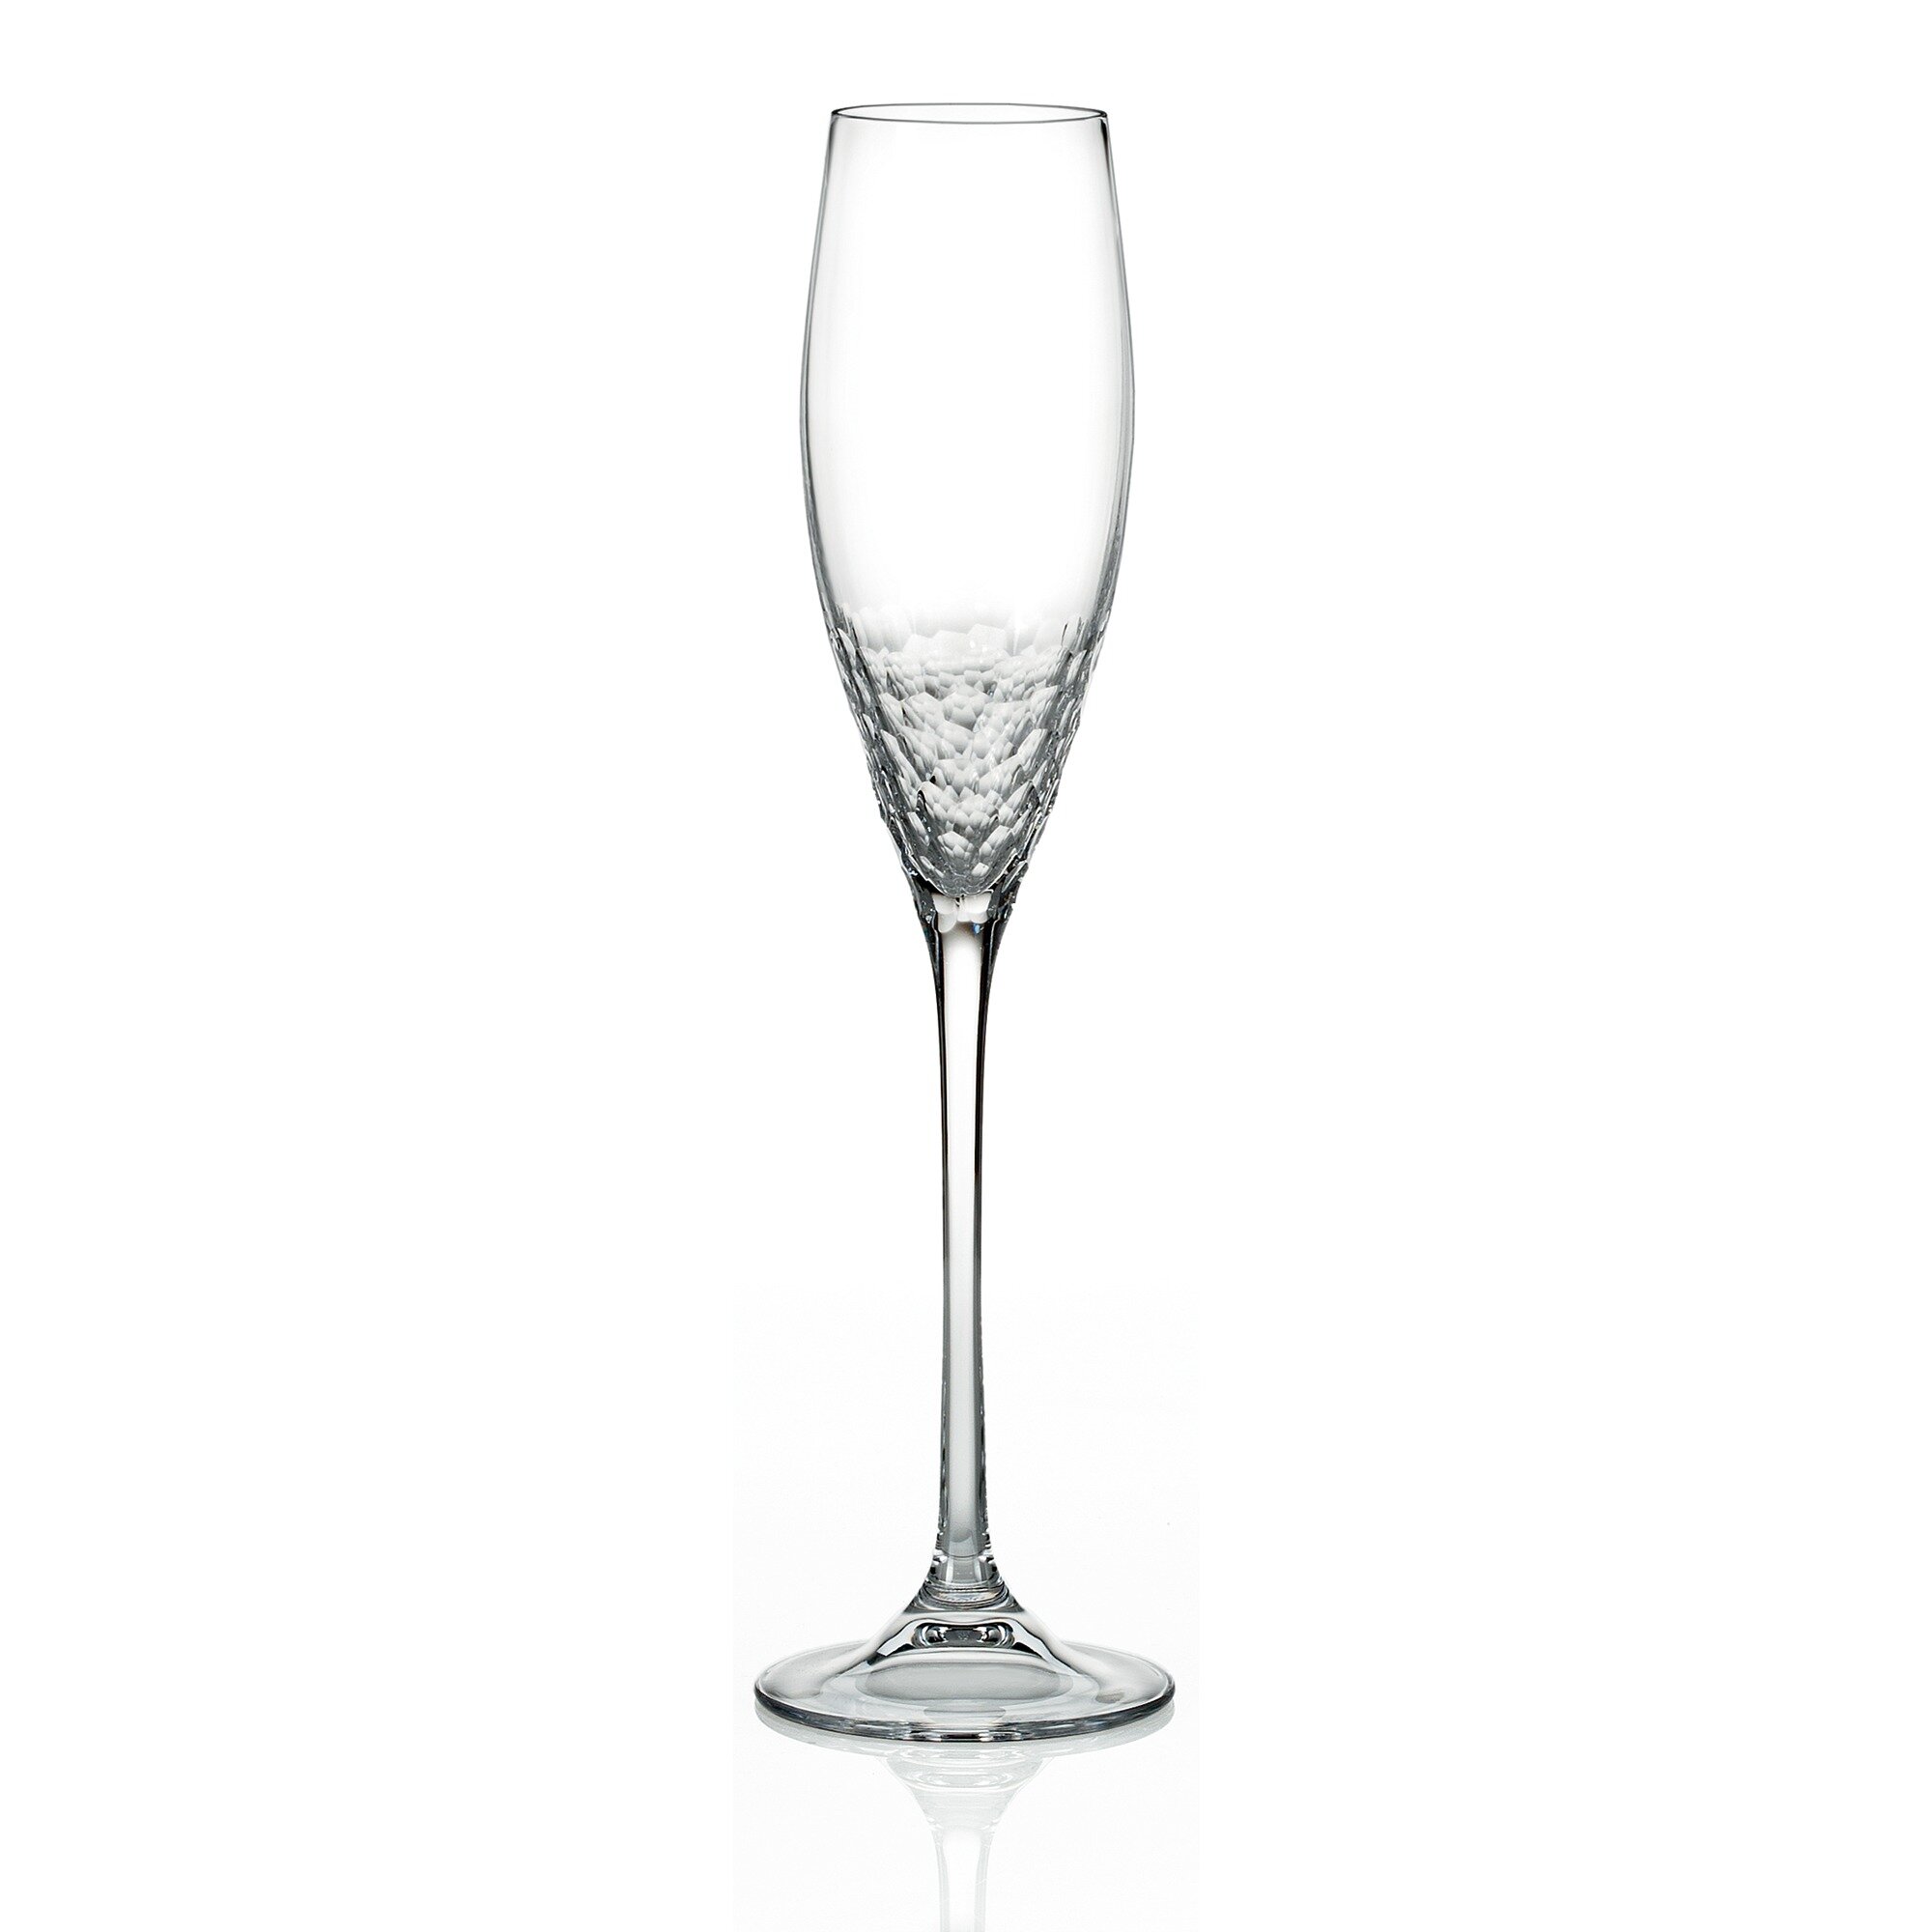 Vera Wang Sequin Crystal Wine Glass, Pair